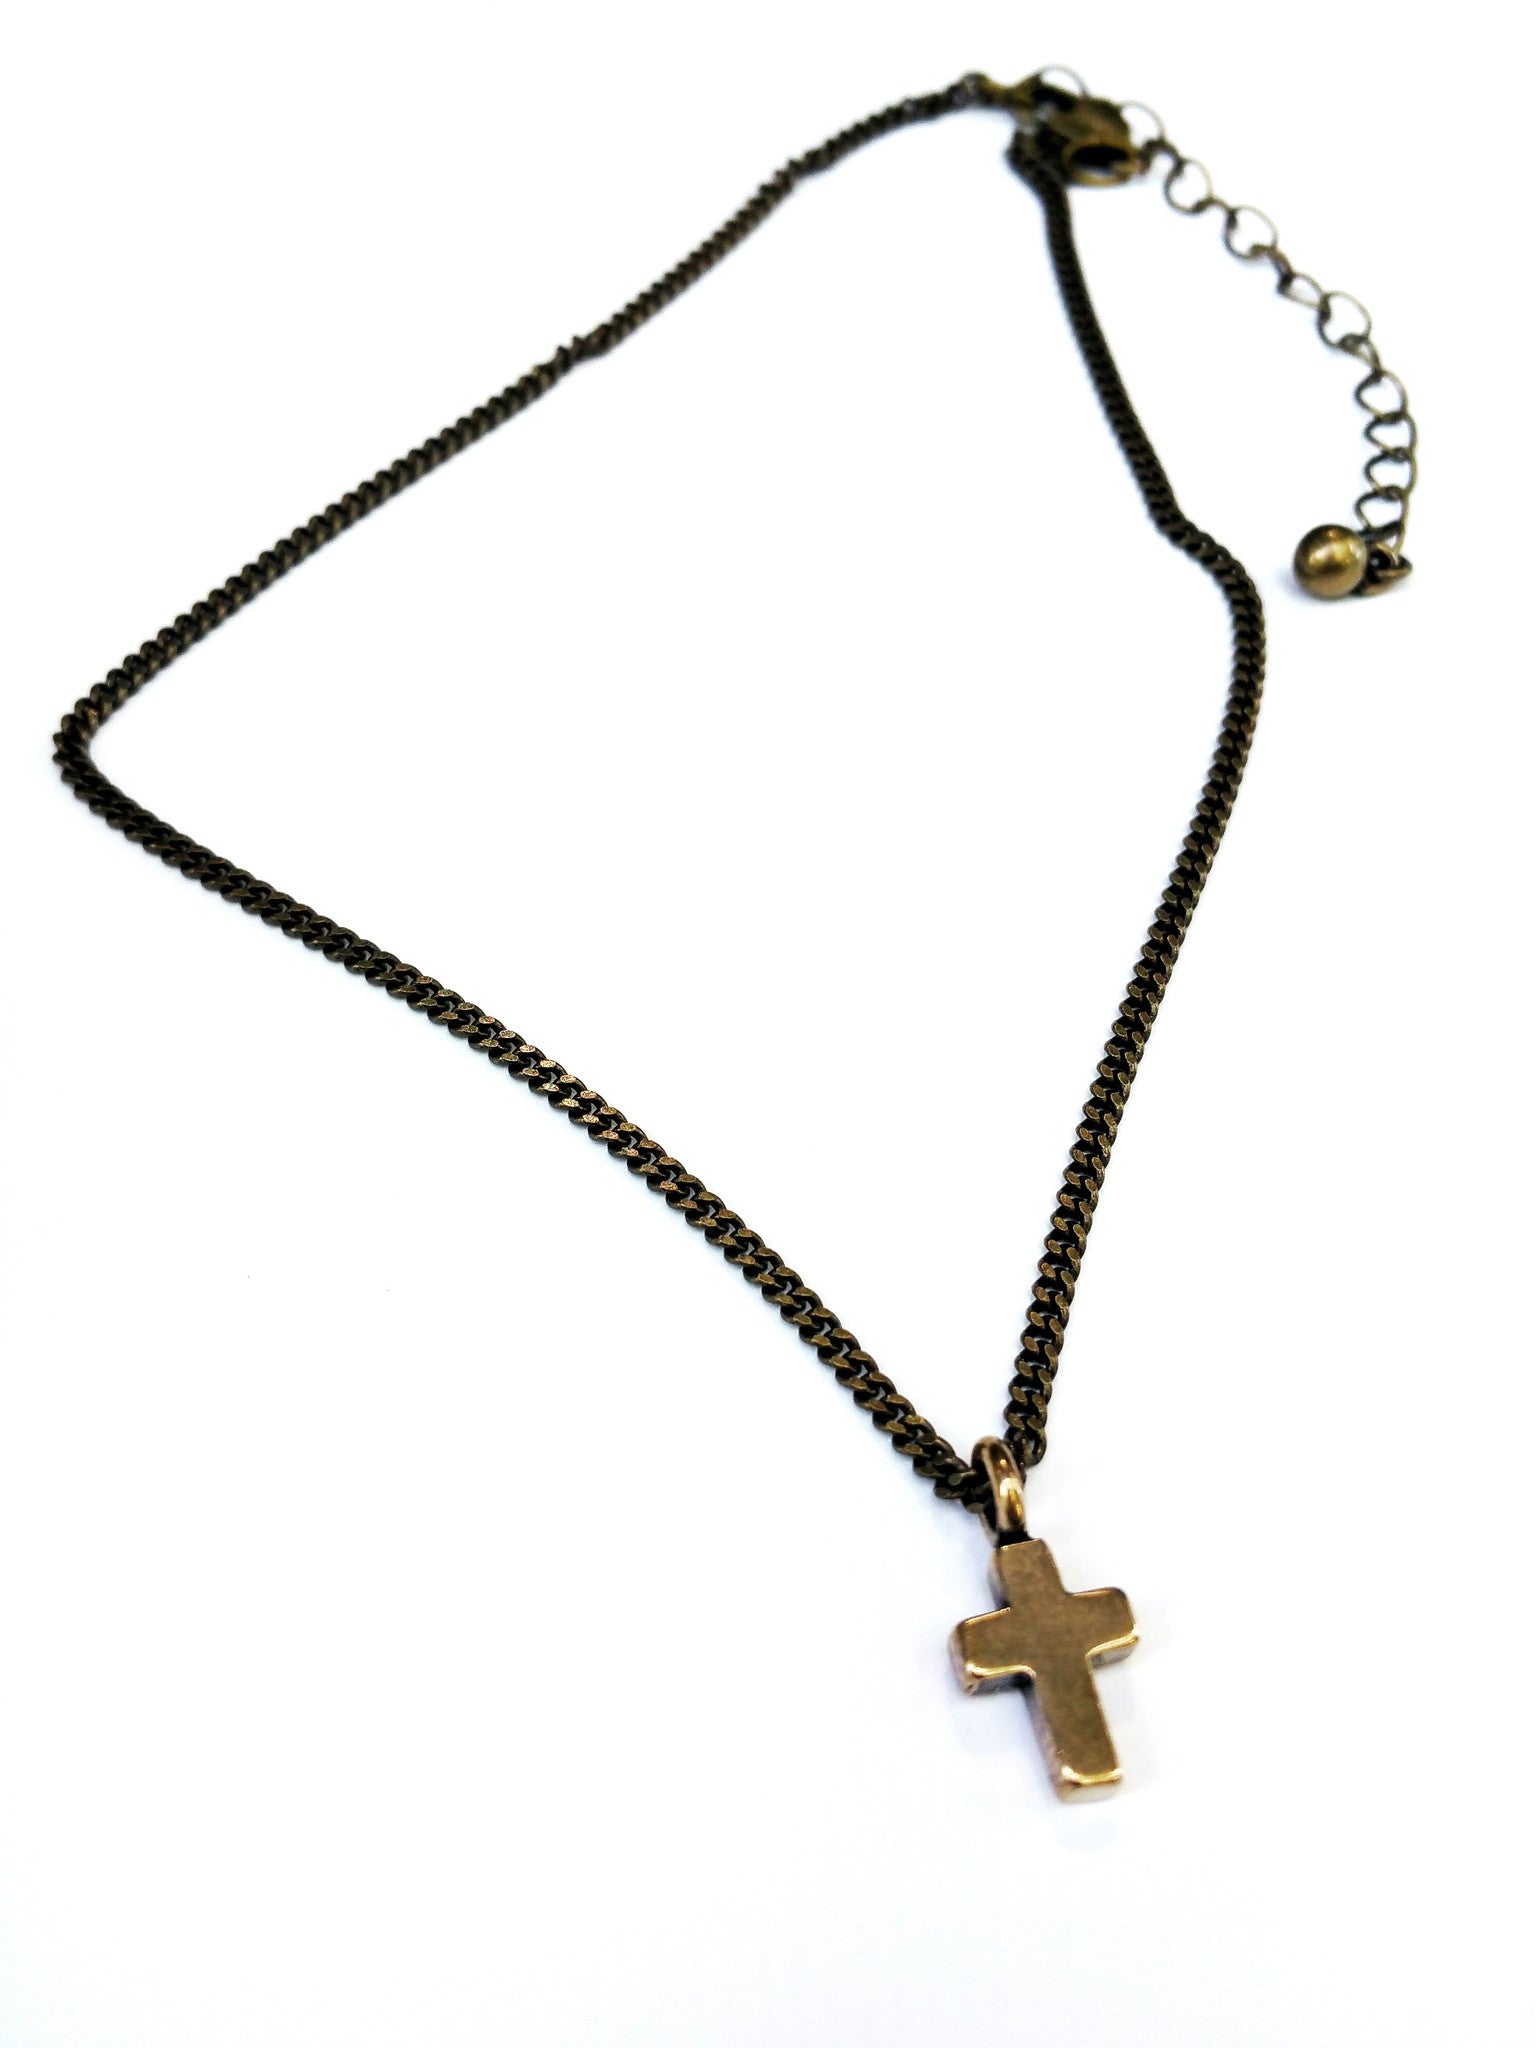 Cross of Comfort Necklace - Red Bronze HONOR EMBLEM Jewelry Choker